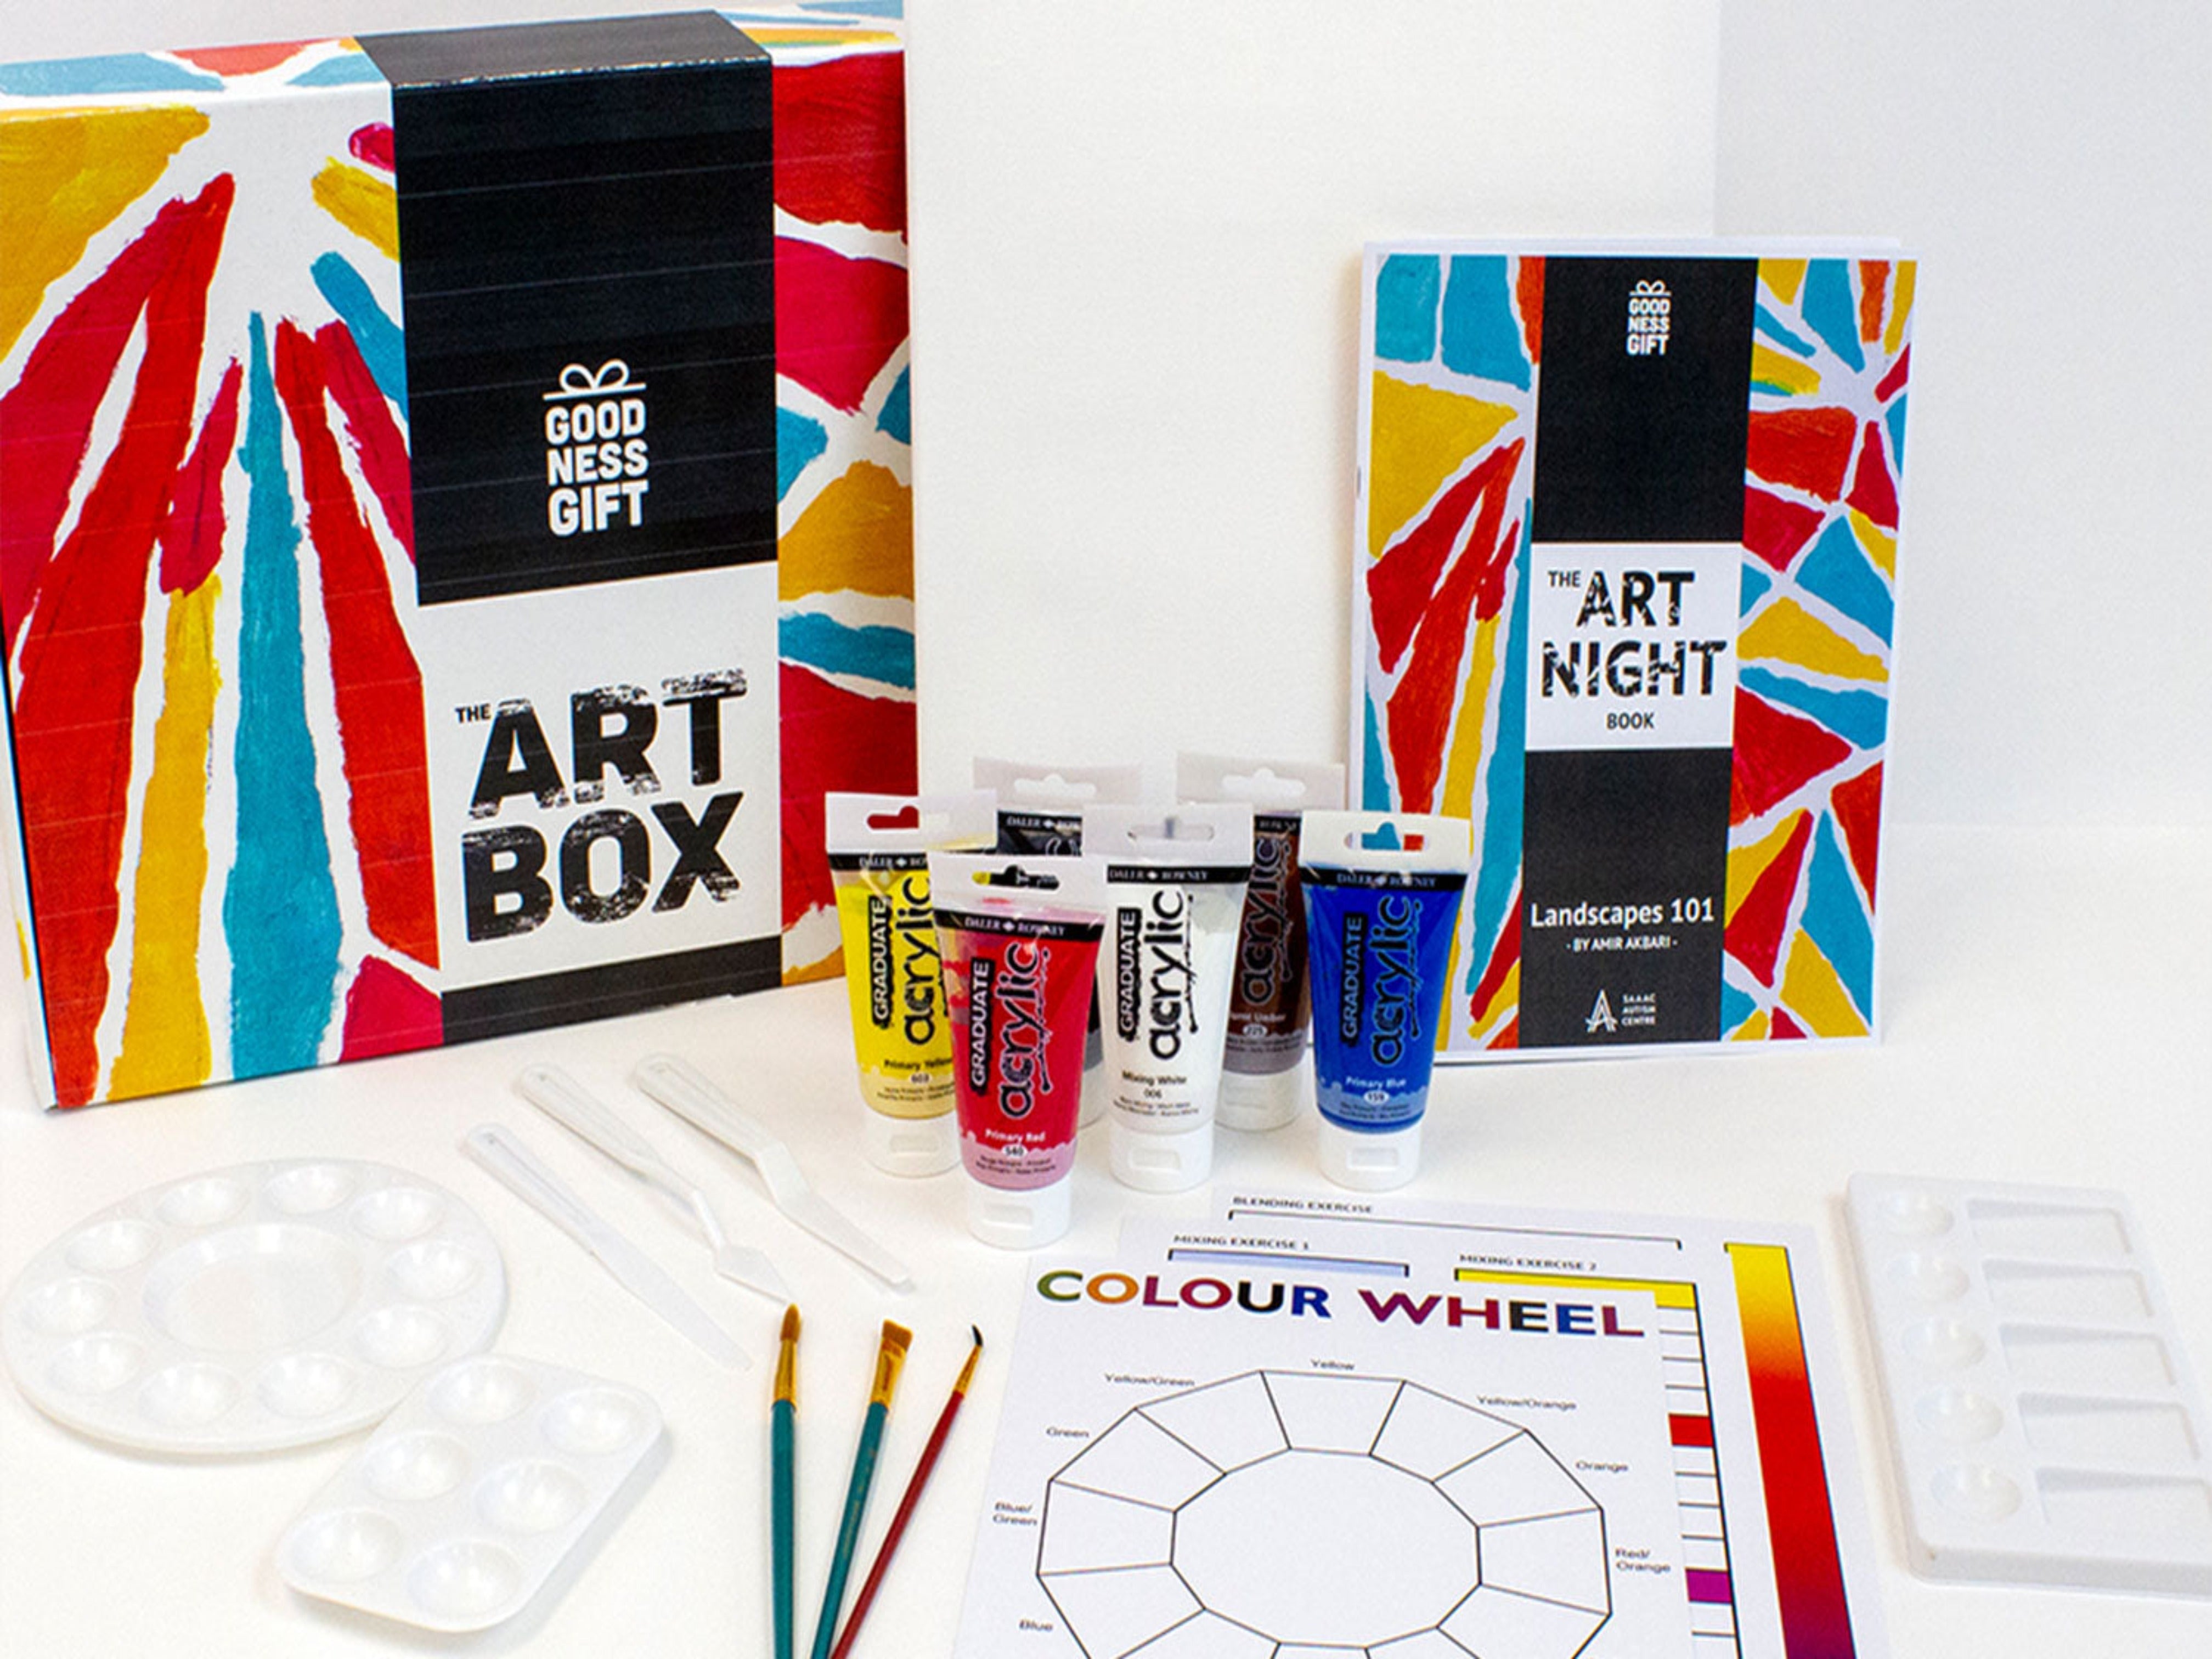 Art Box - Goodness Gift